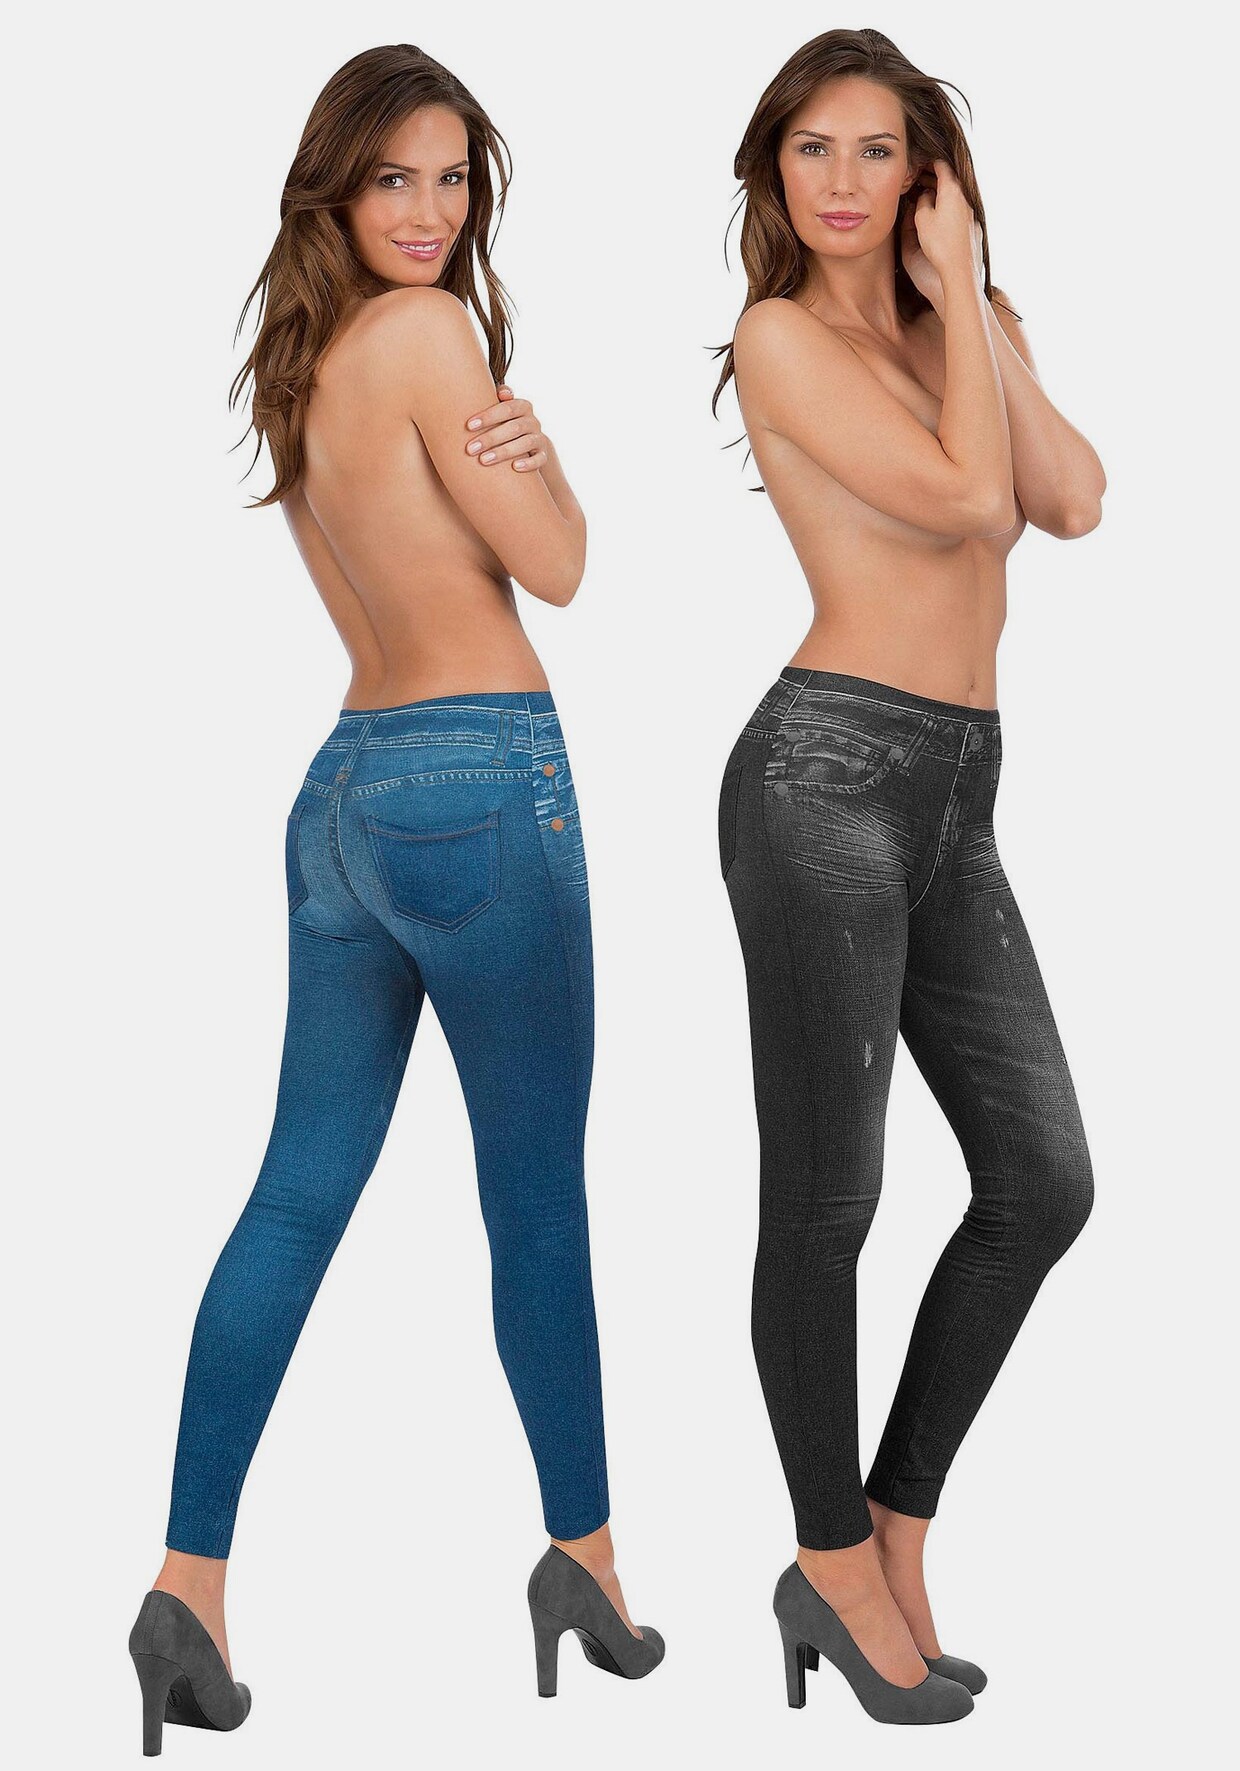 Jeansleggings - 1x jeans + 1x schwarz